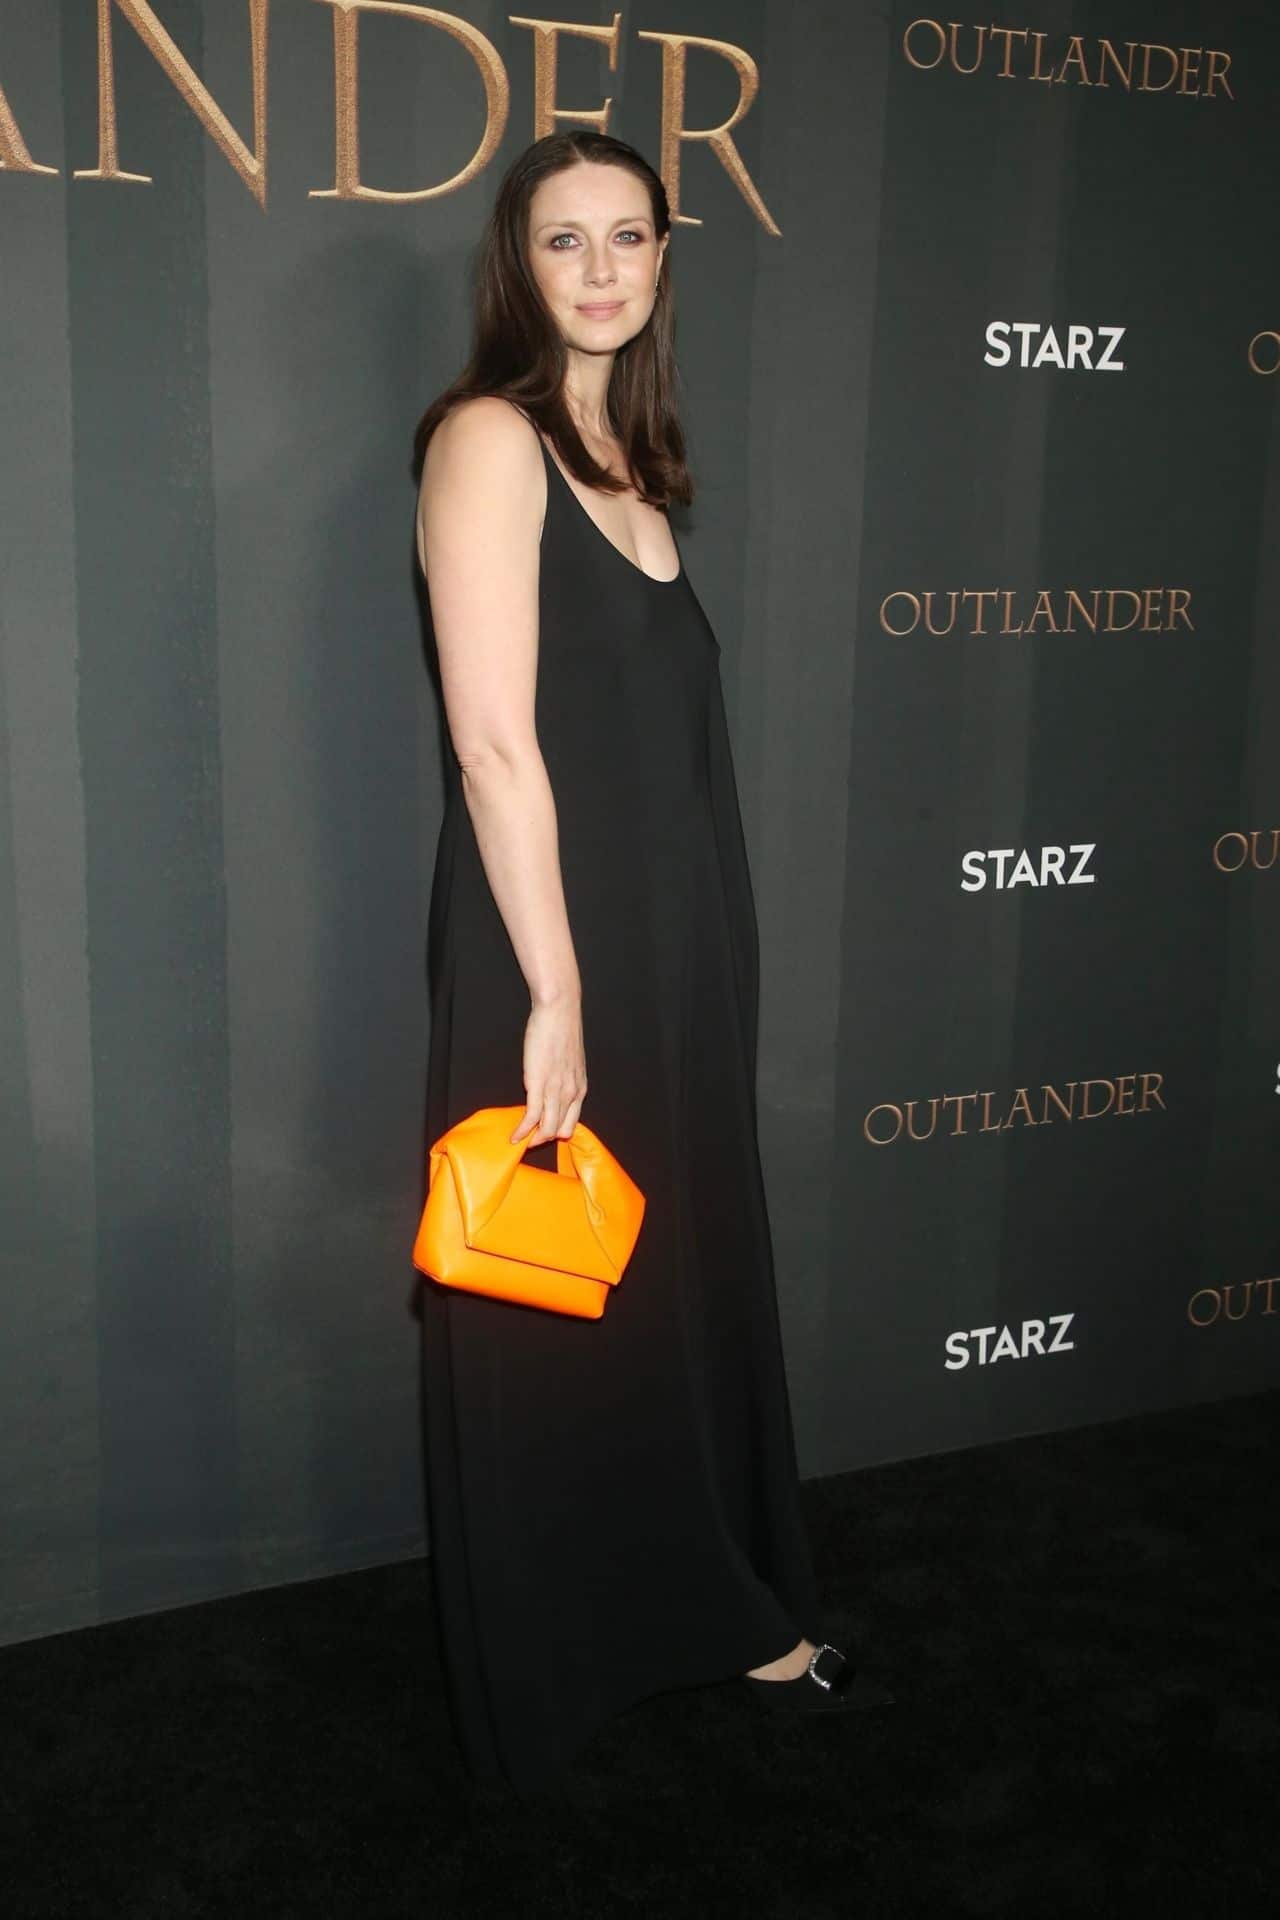 Caitriona Balfe Posed in a Black Dress at "Outlander" Season Six Premiere